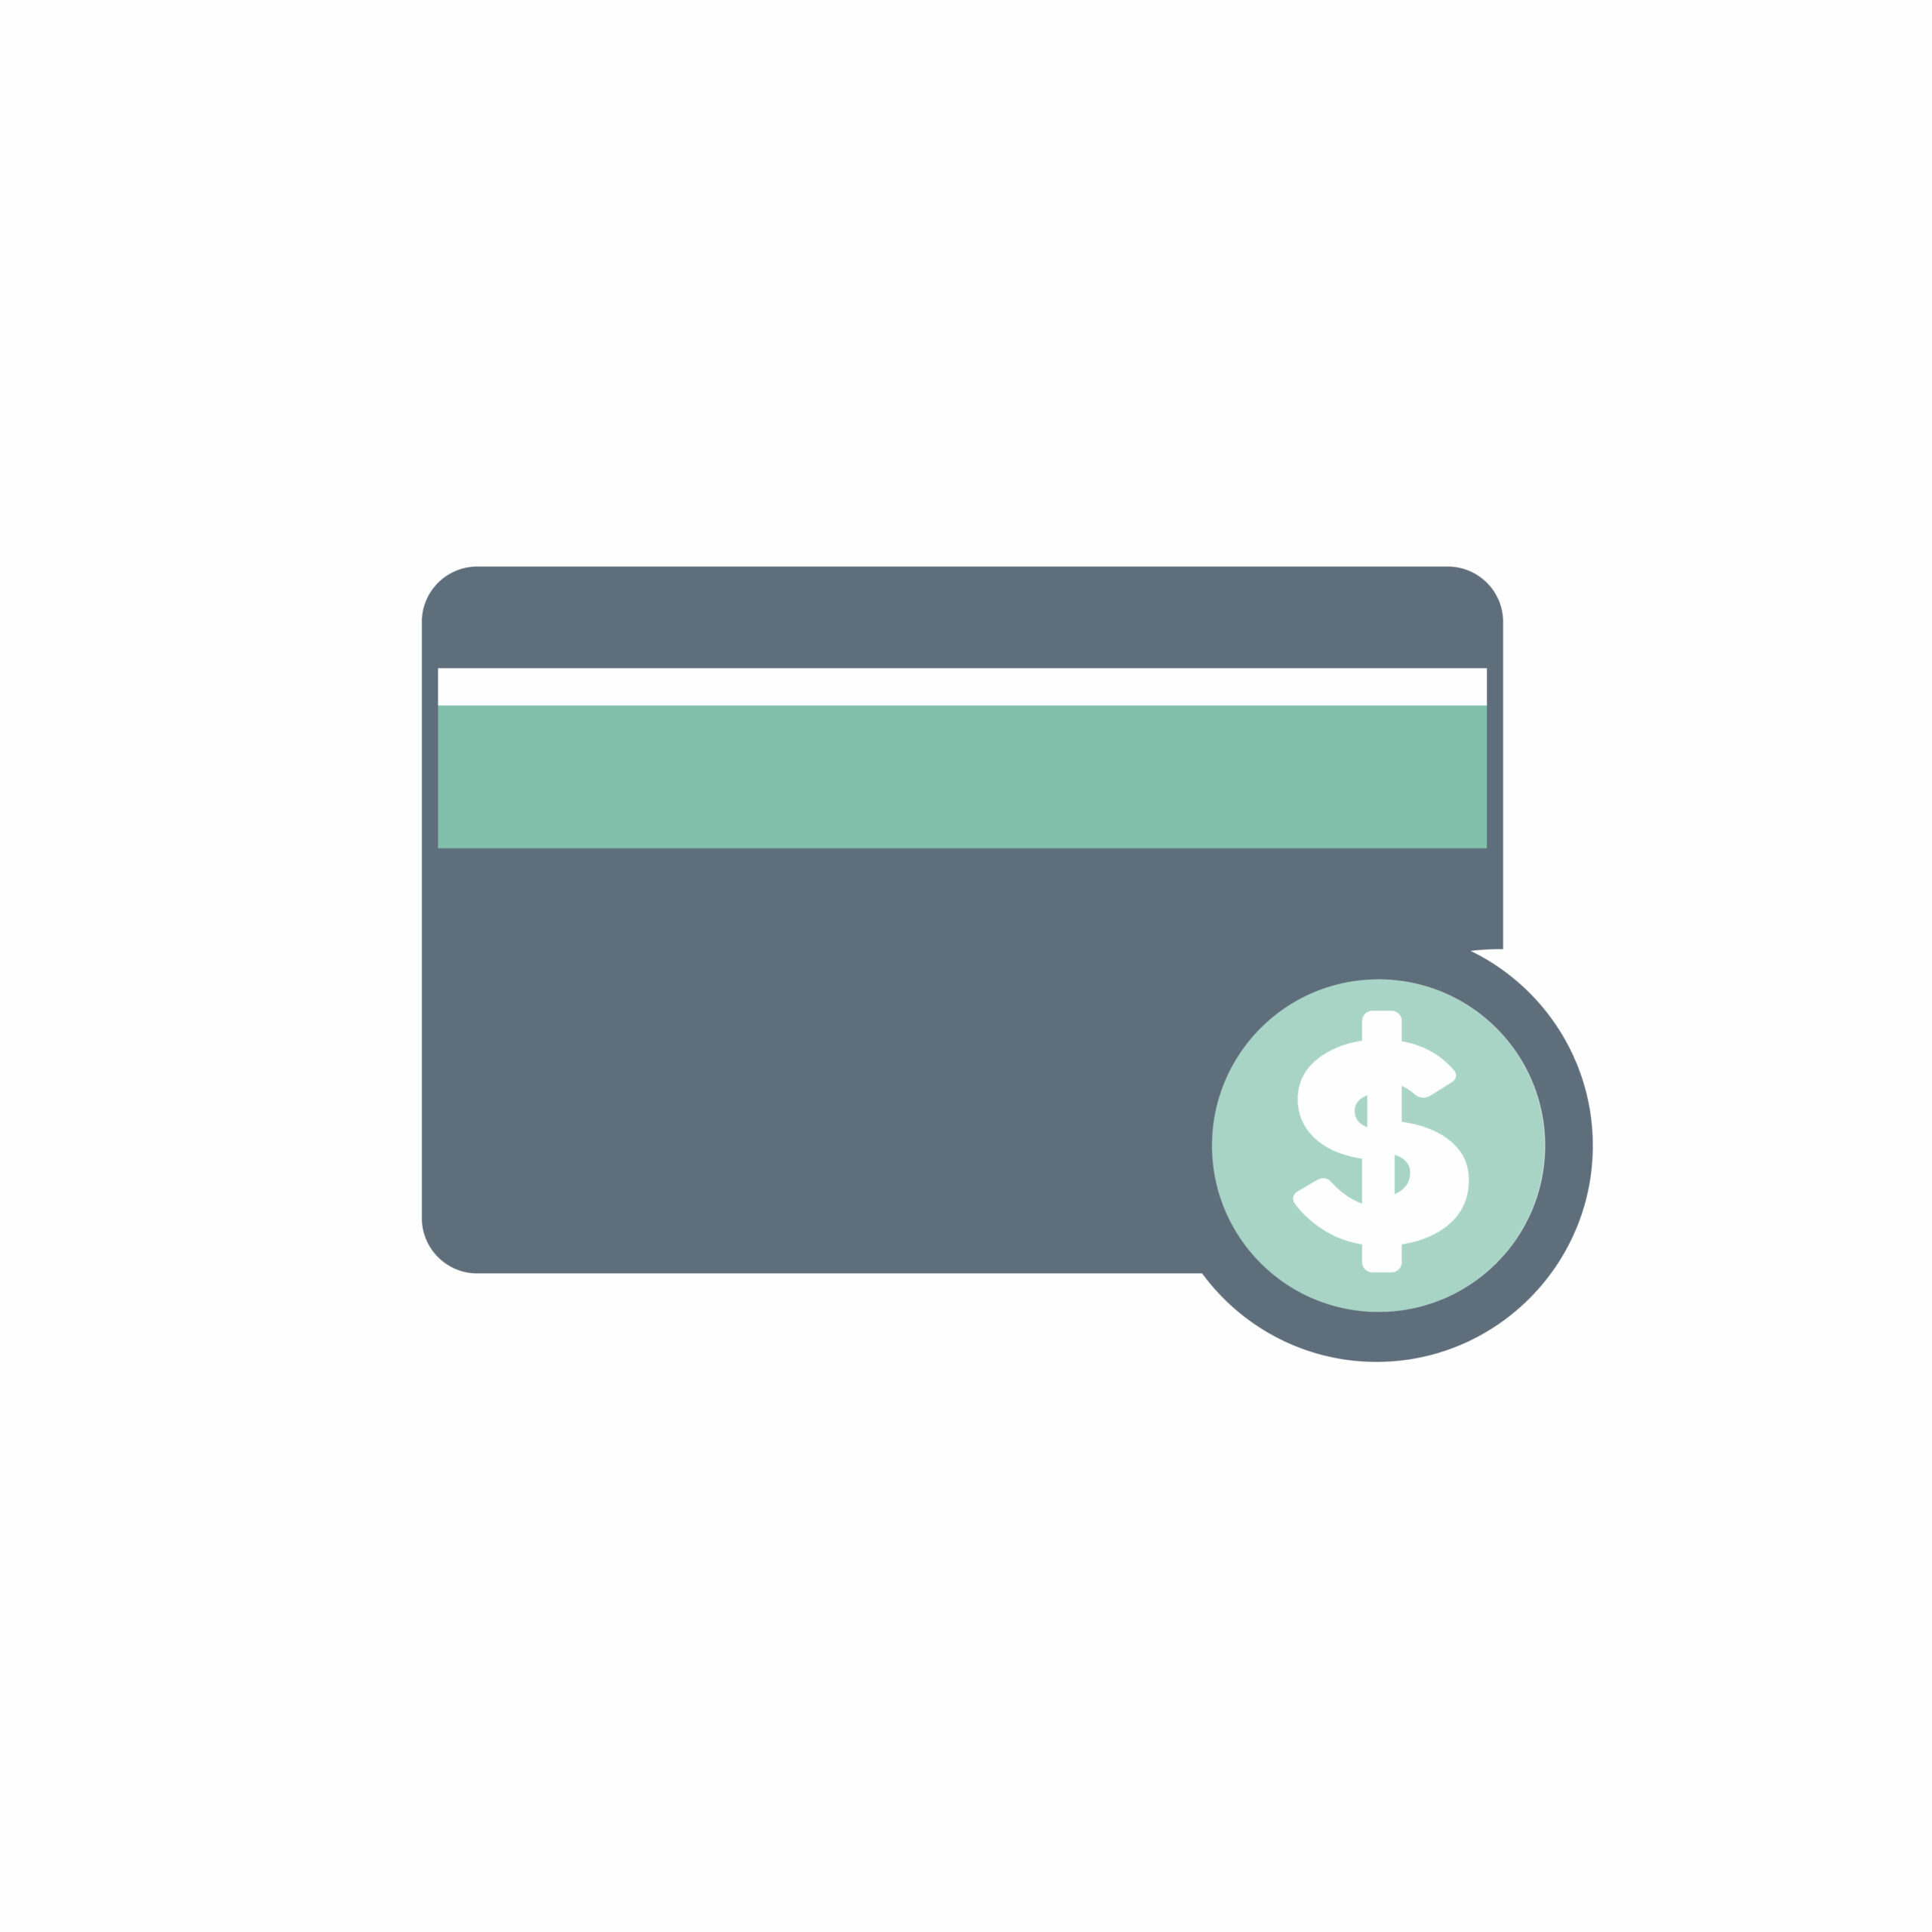 Illustration of credit card icon